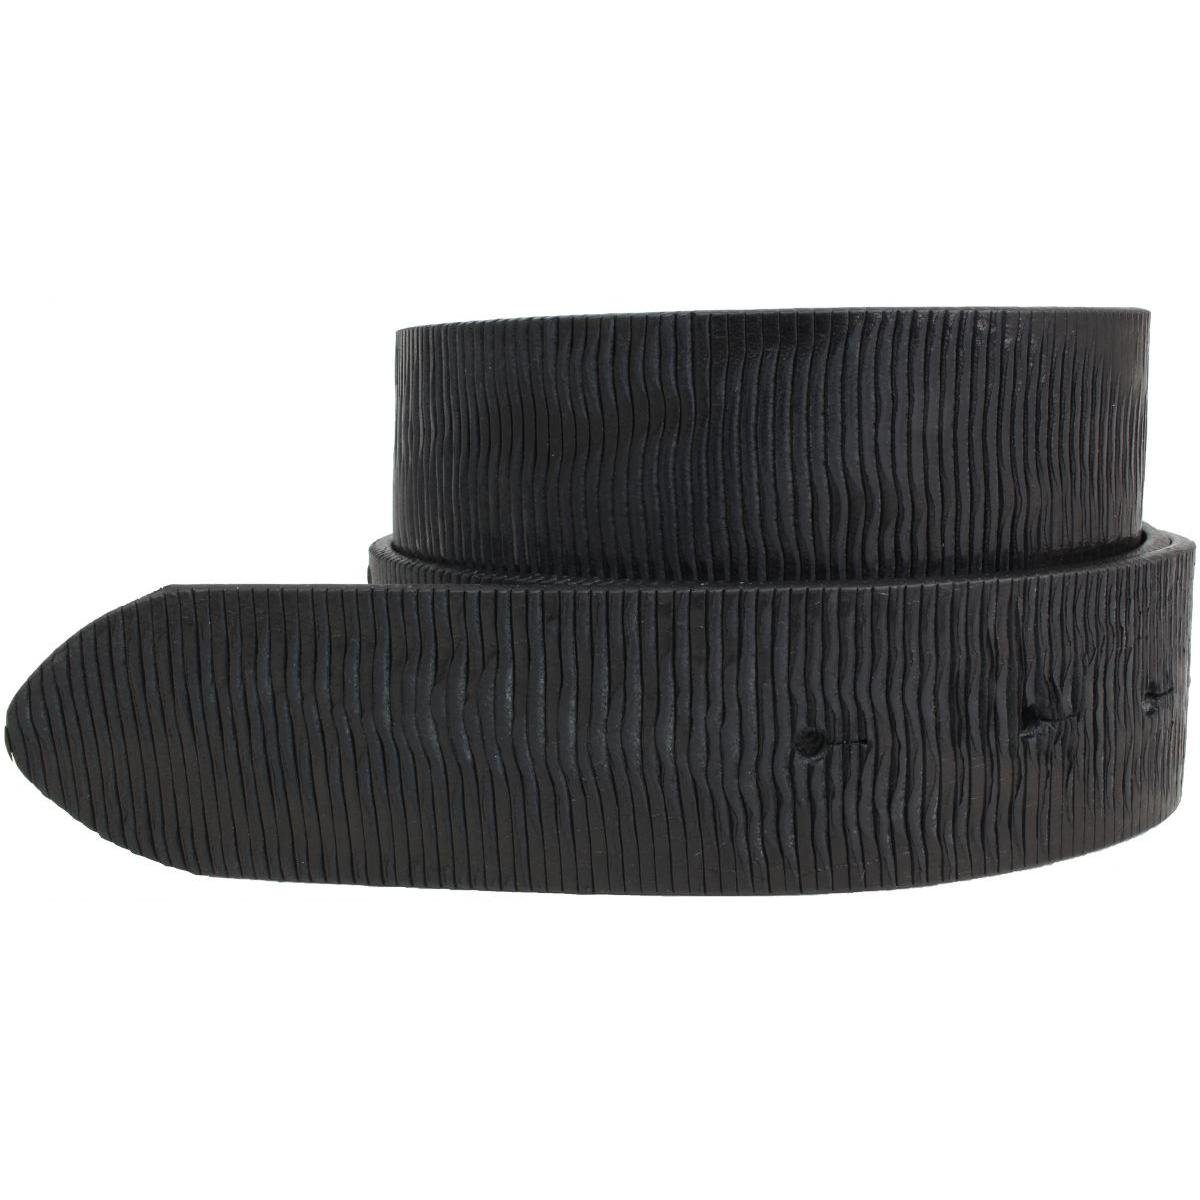 BELTINGER Gürtel Vollrindleder ohne Metall-Optik Ledergürtel Schwarz Leder-Gürte cm 4 - Schnalle aus